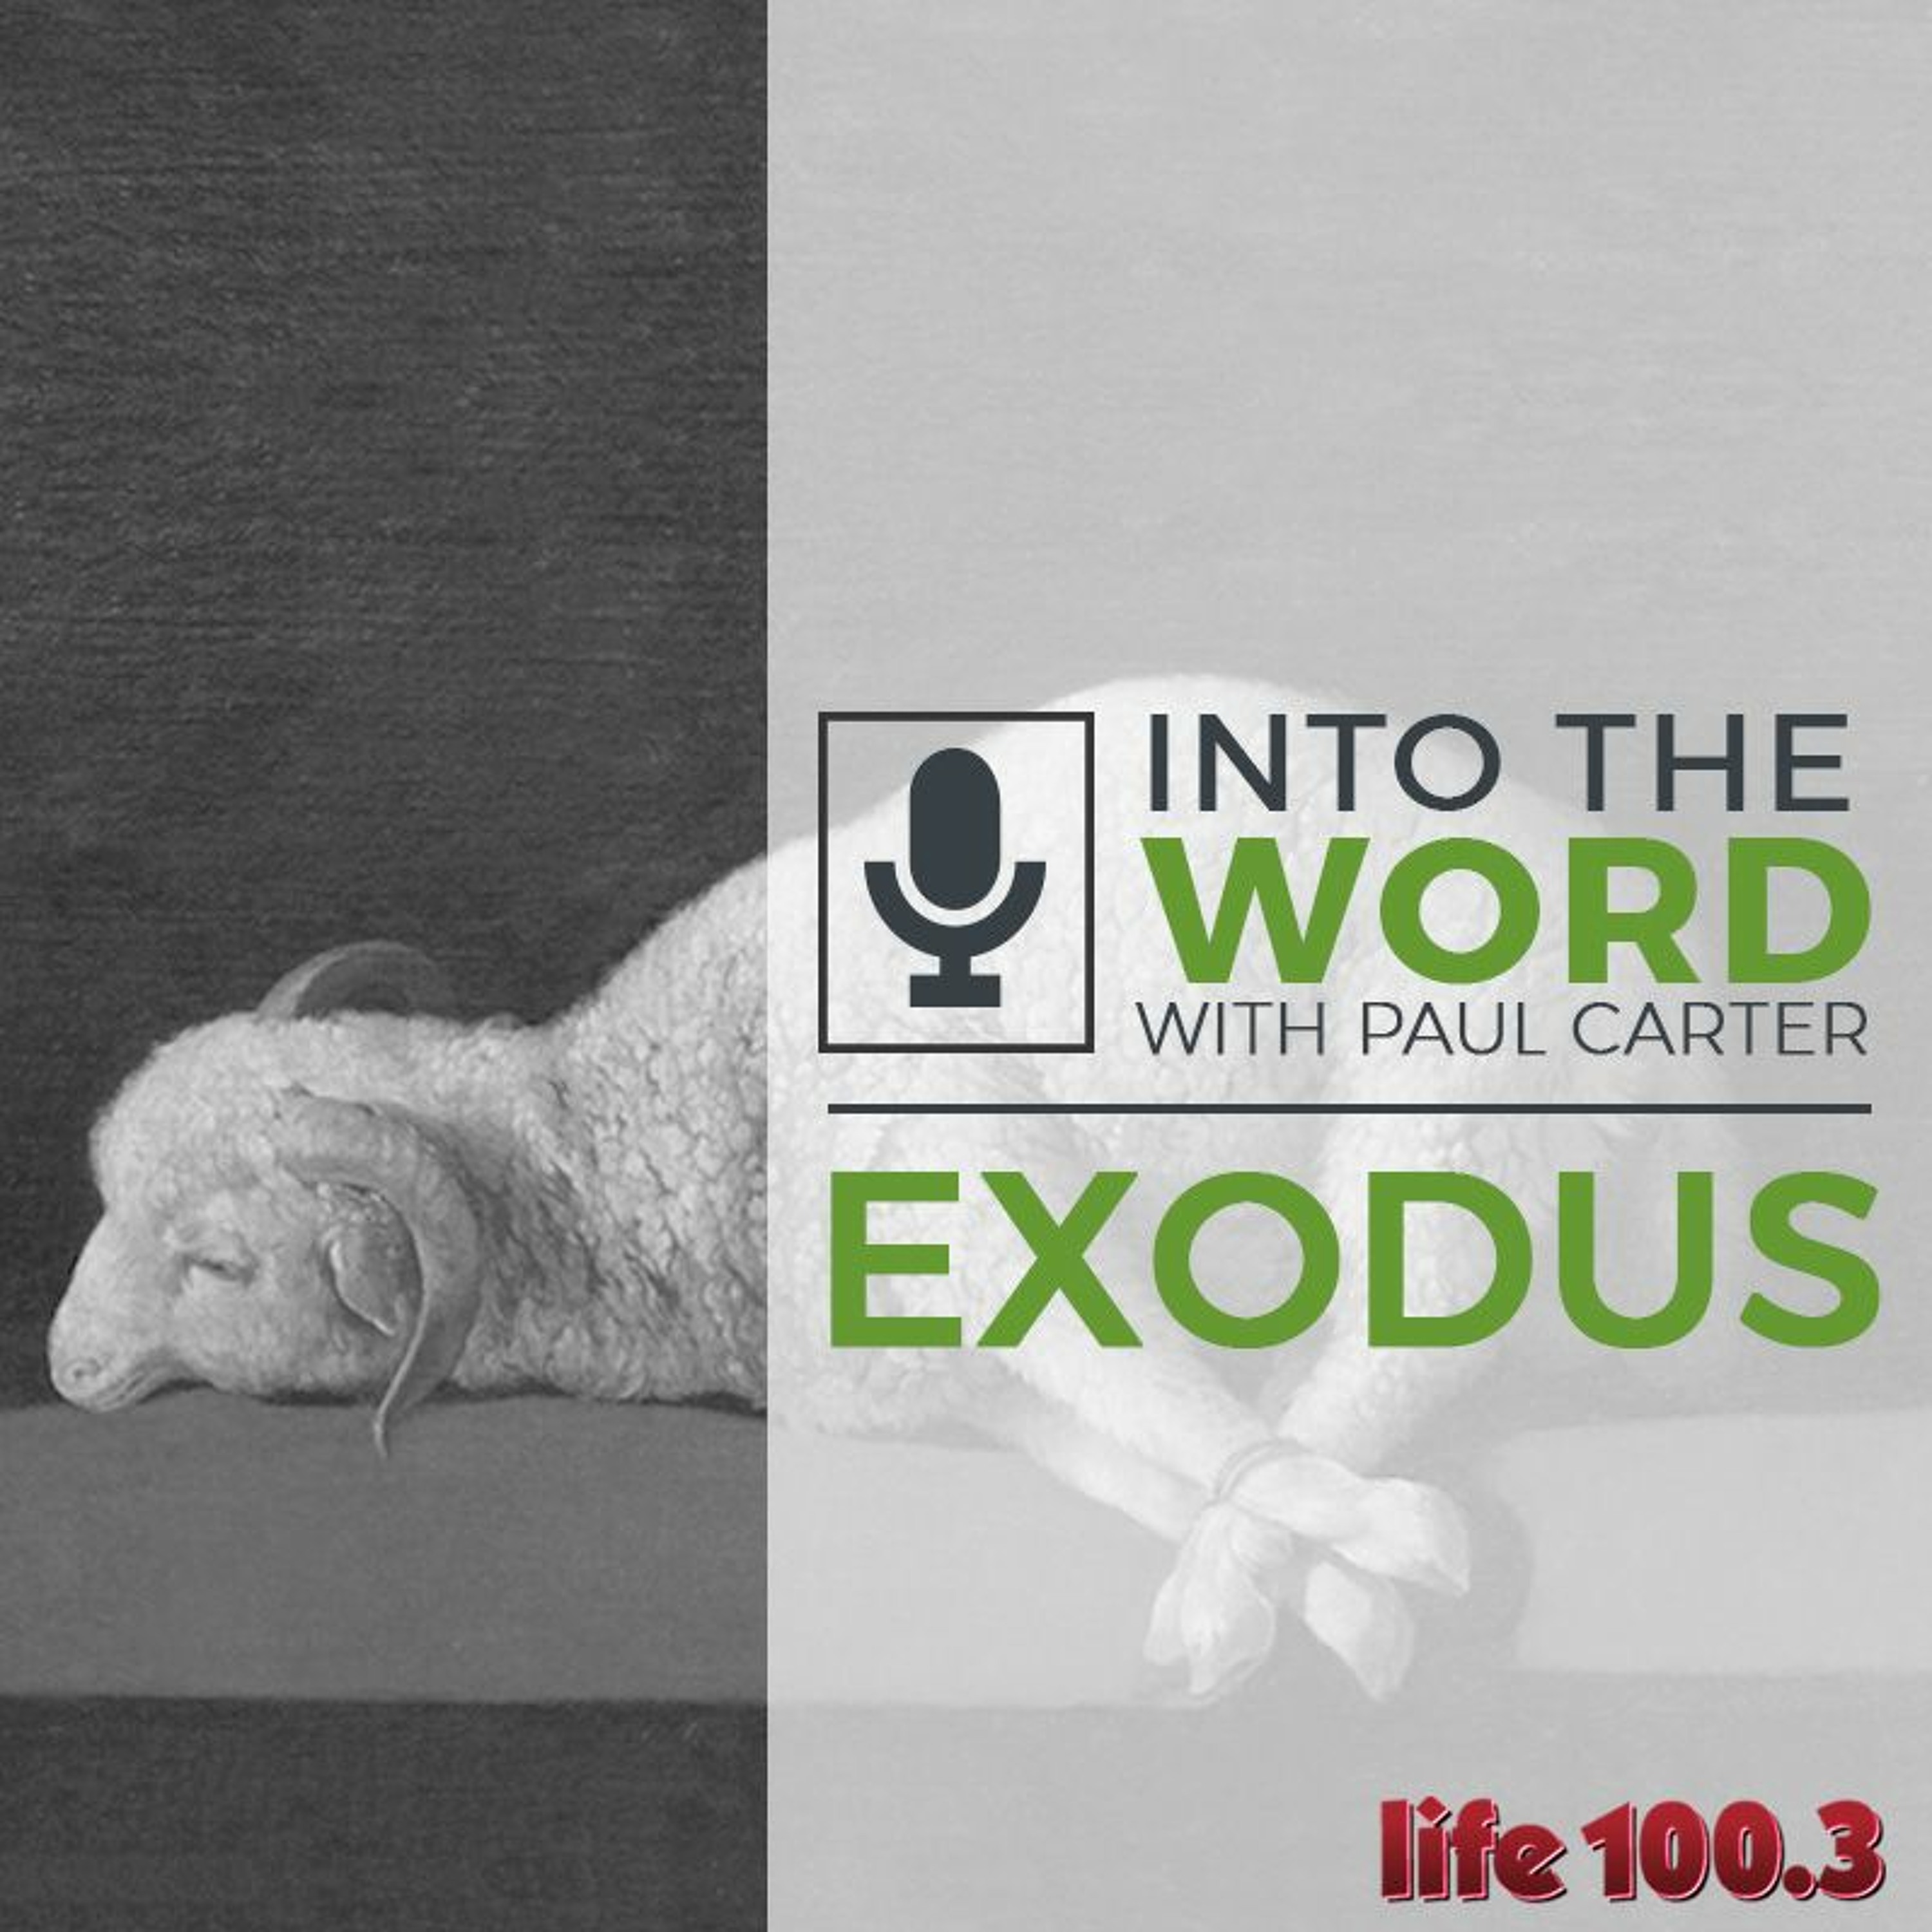  Life 100.3 Exodus 20